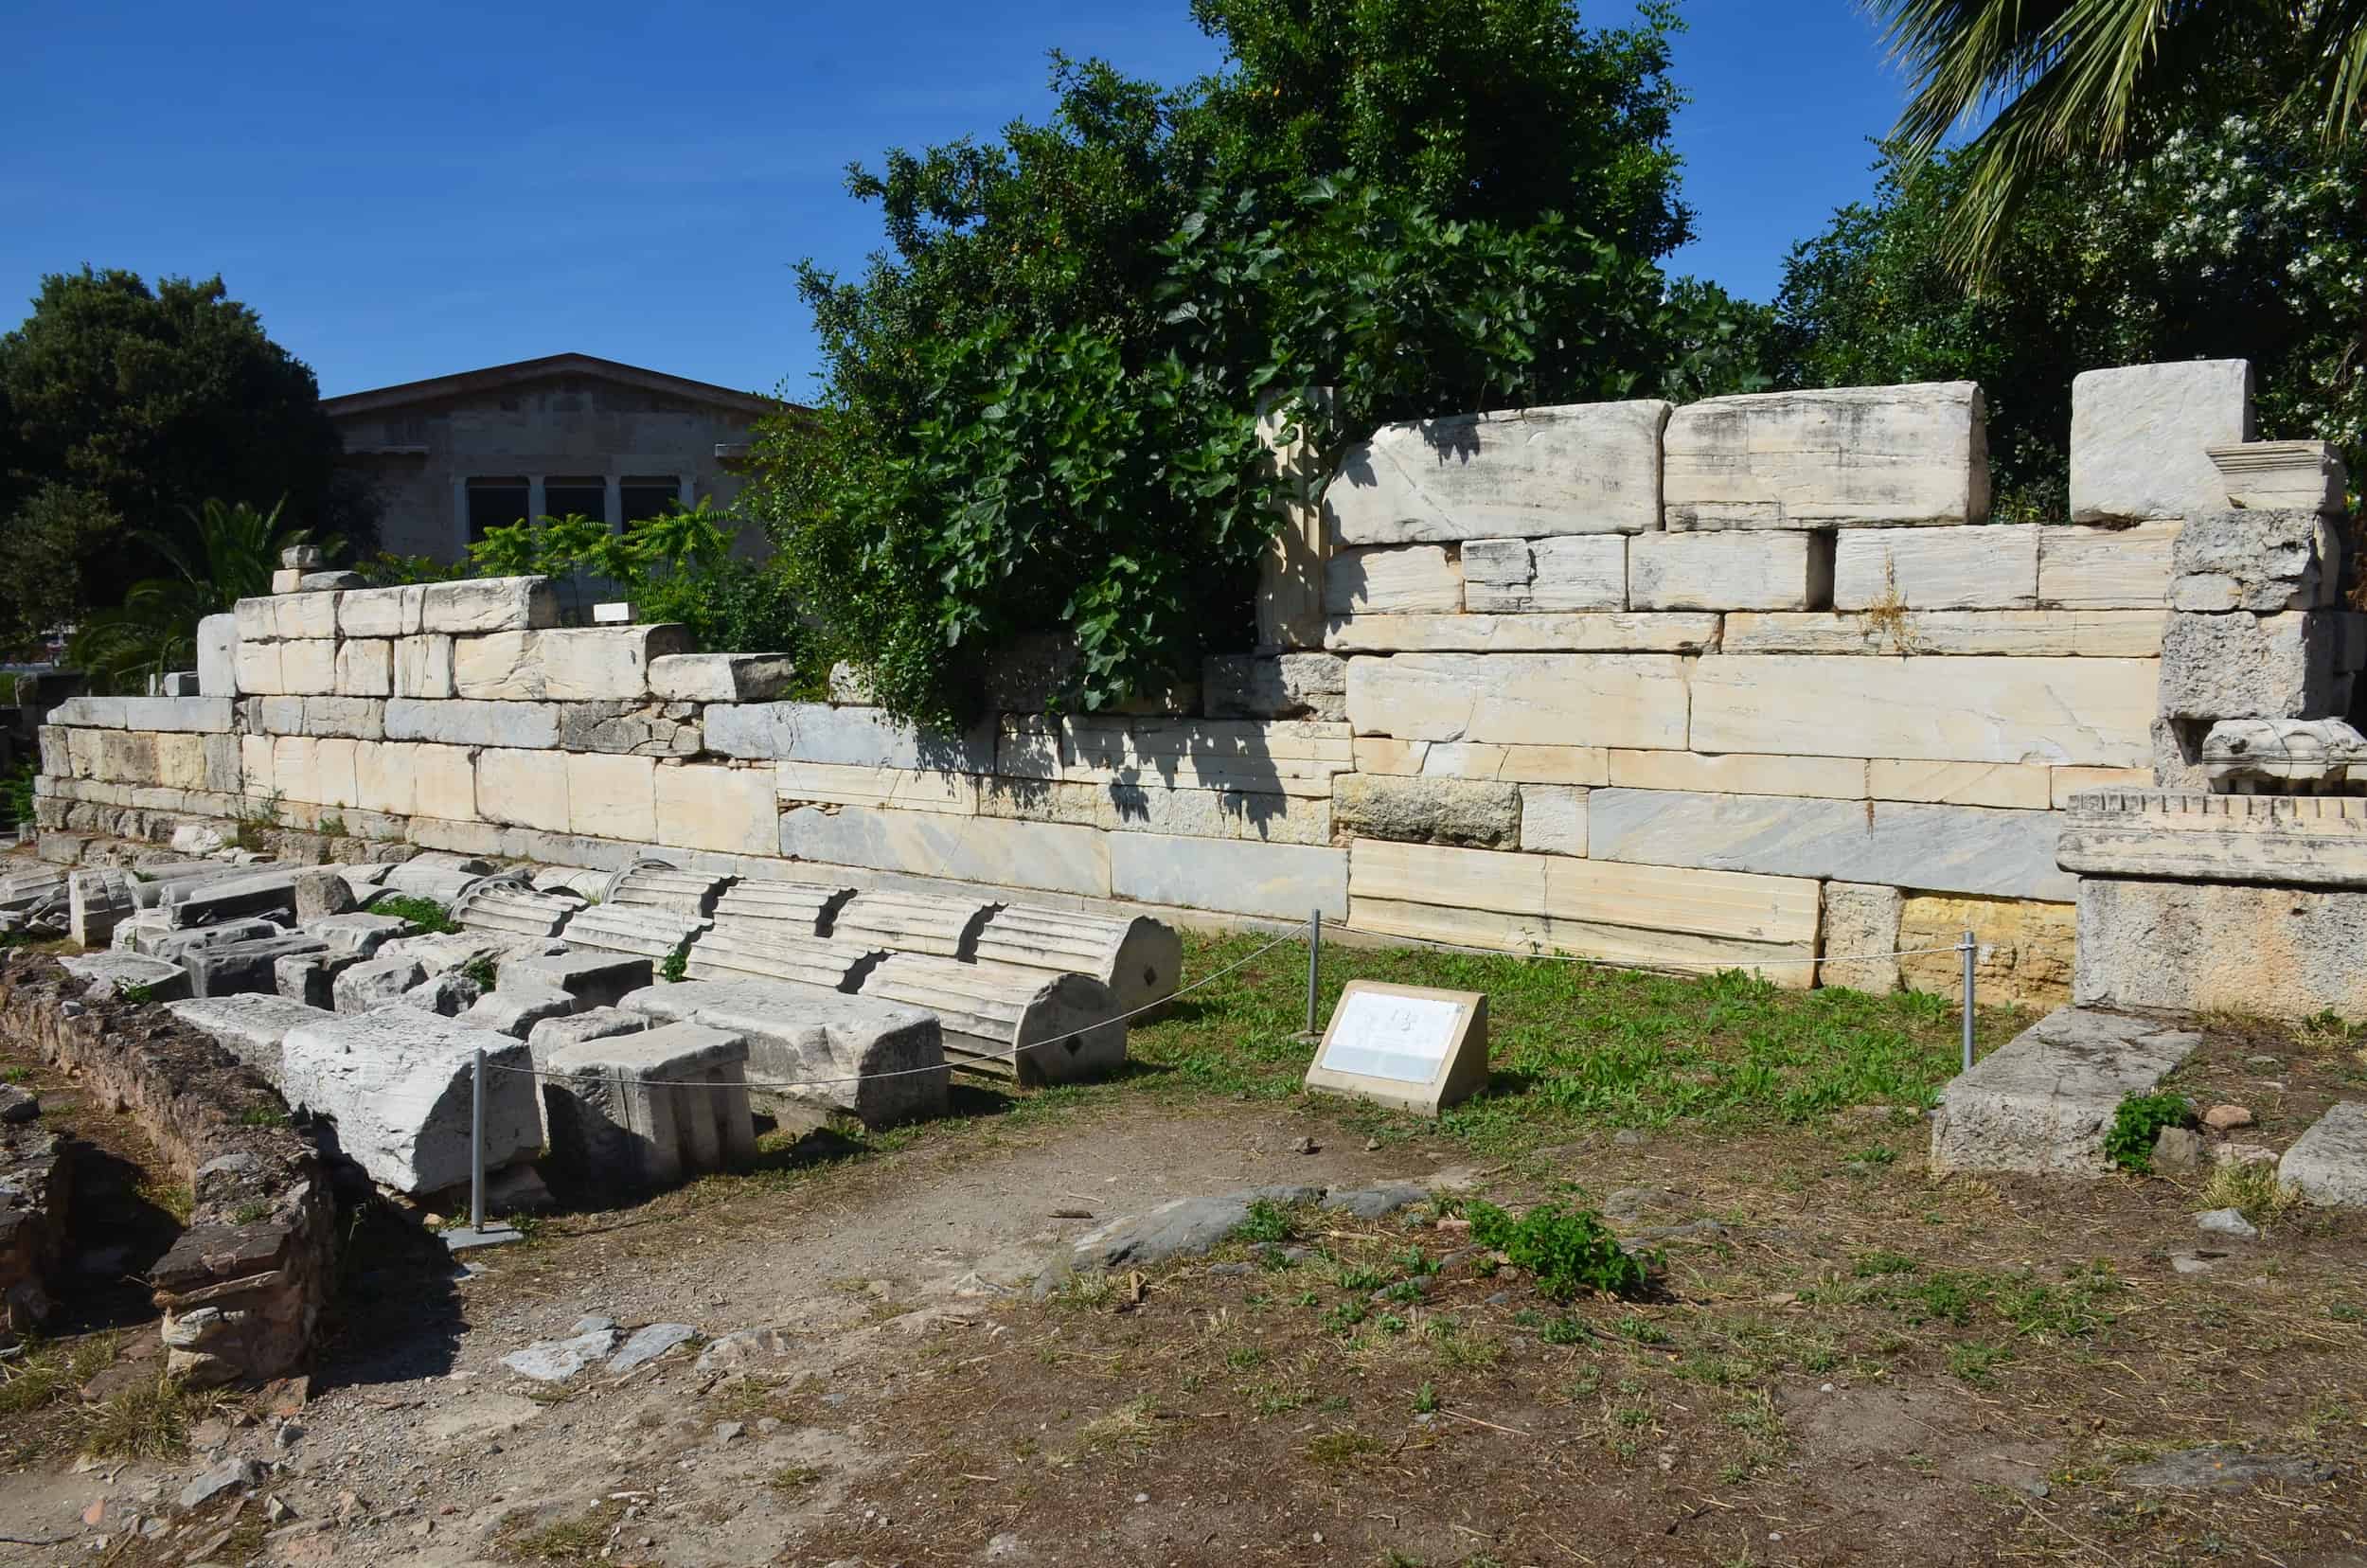 Late Roman Wall at the Ancient Agora of Athens